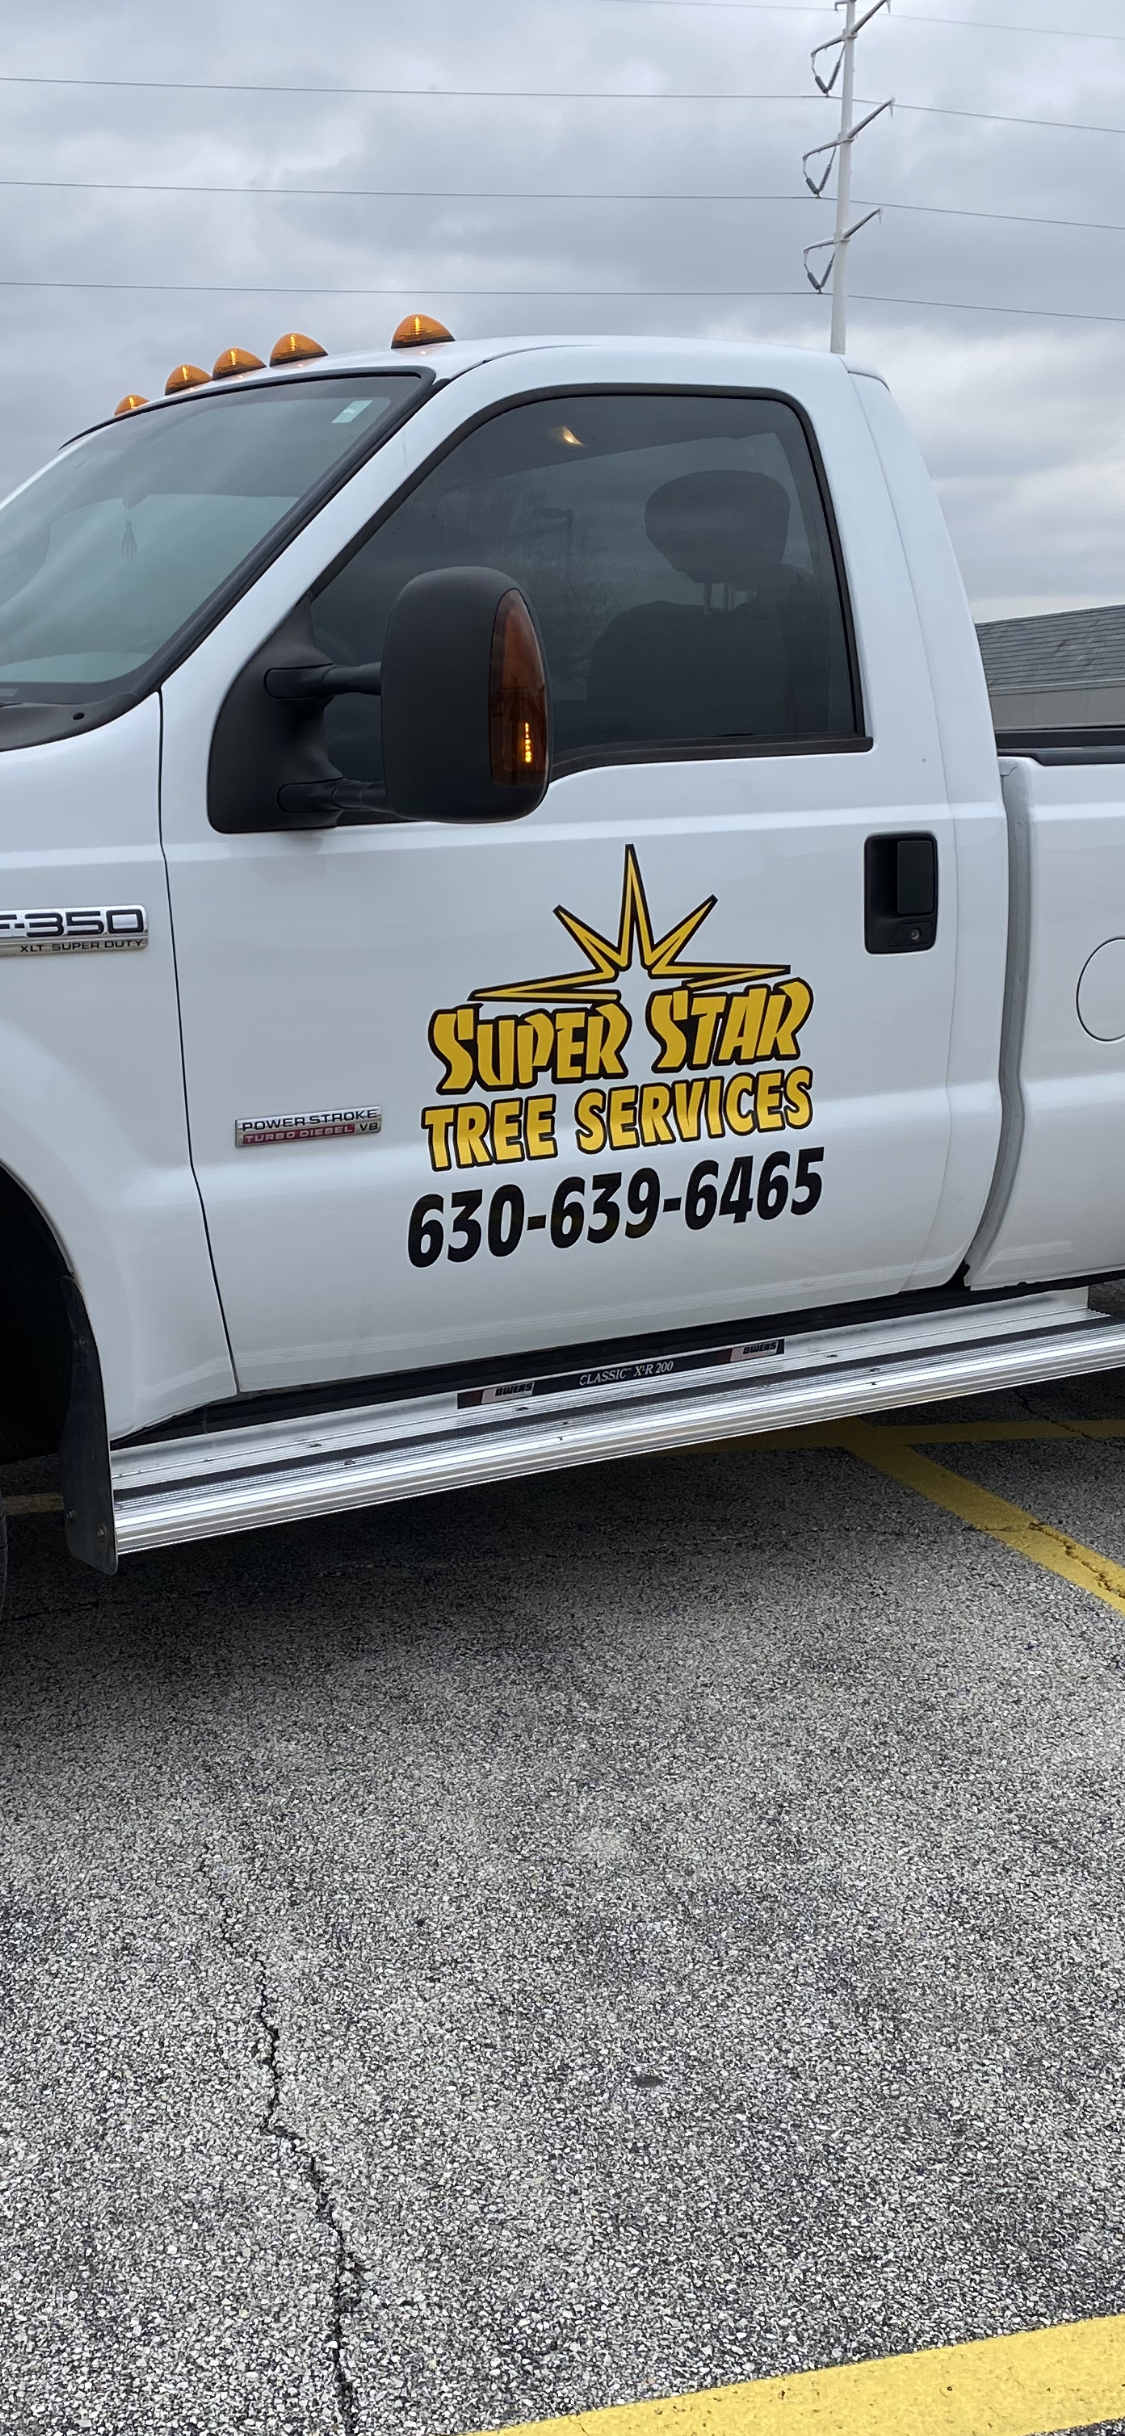 Super Star Tree Service Inc West Chicago (630)639-6465